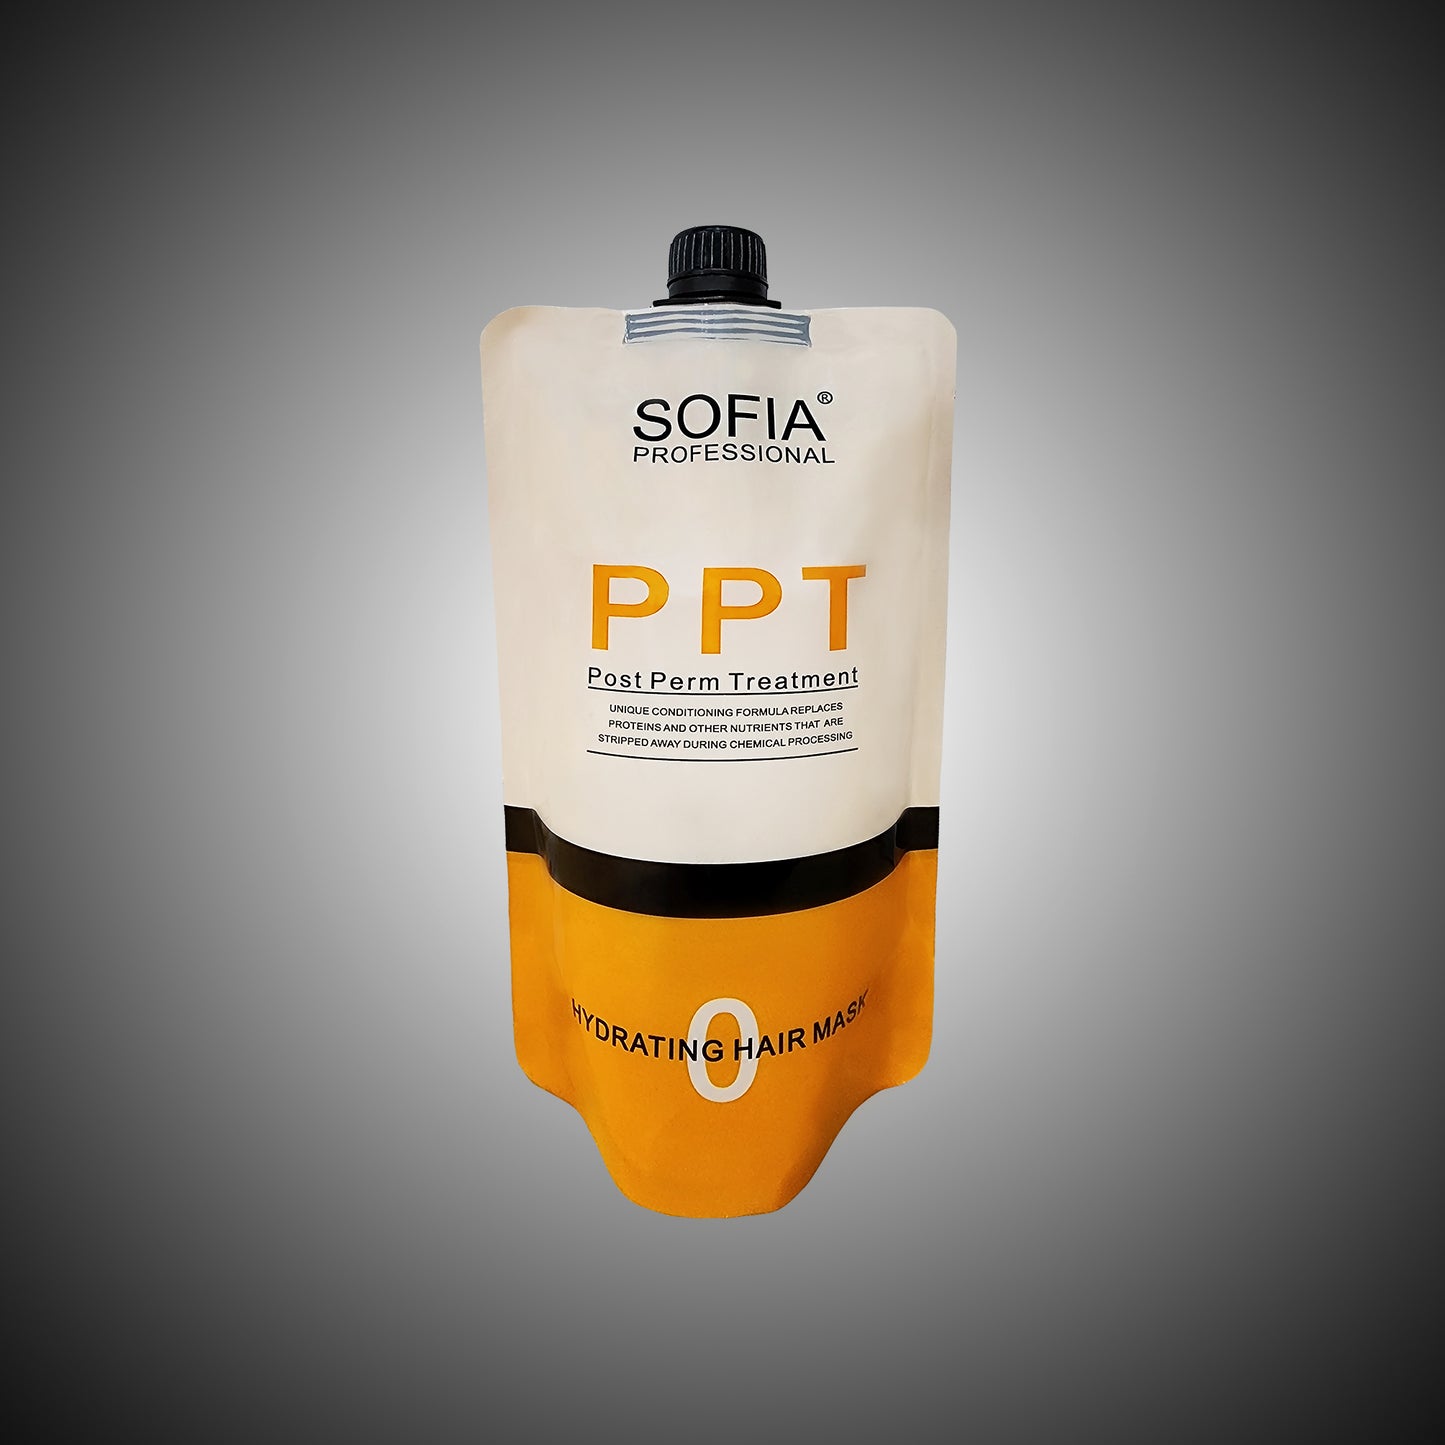 SOFIA EMP PPT Xeremie Excellent Liner Post Perm Treatment (options available)